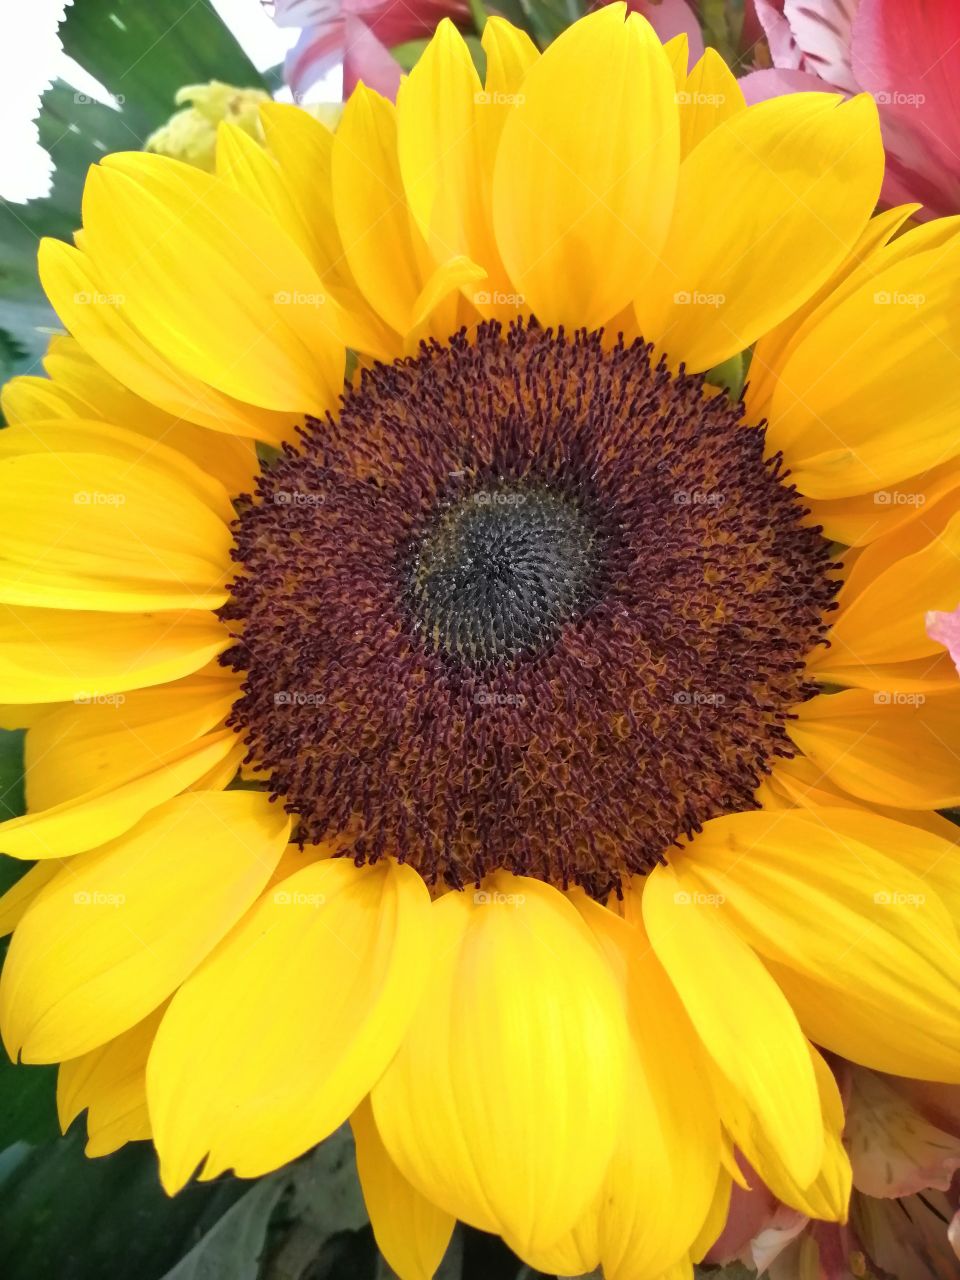 Closeup picture of a beautiful sunflower.